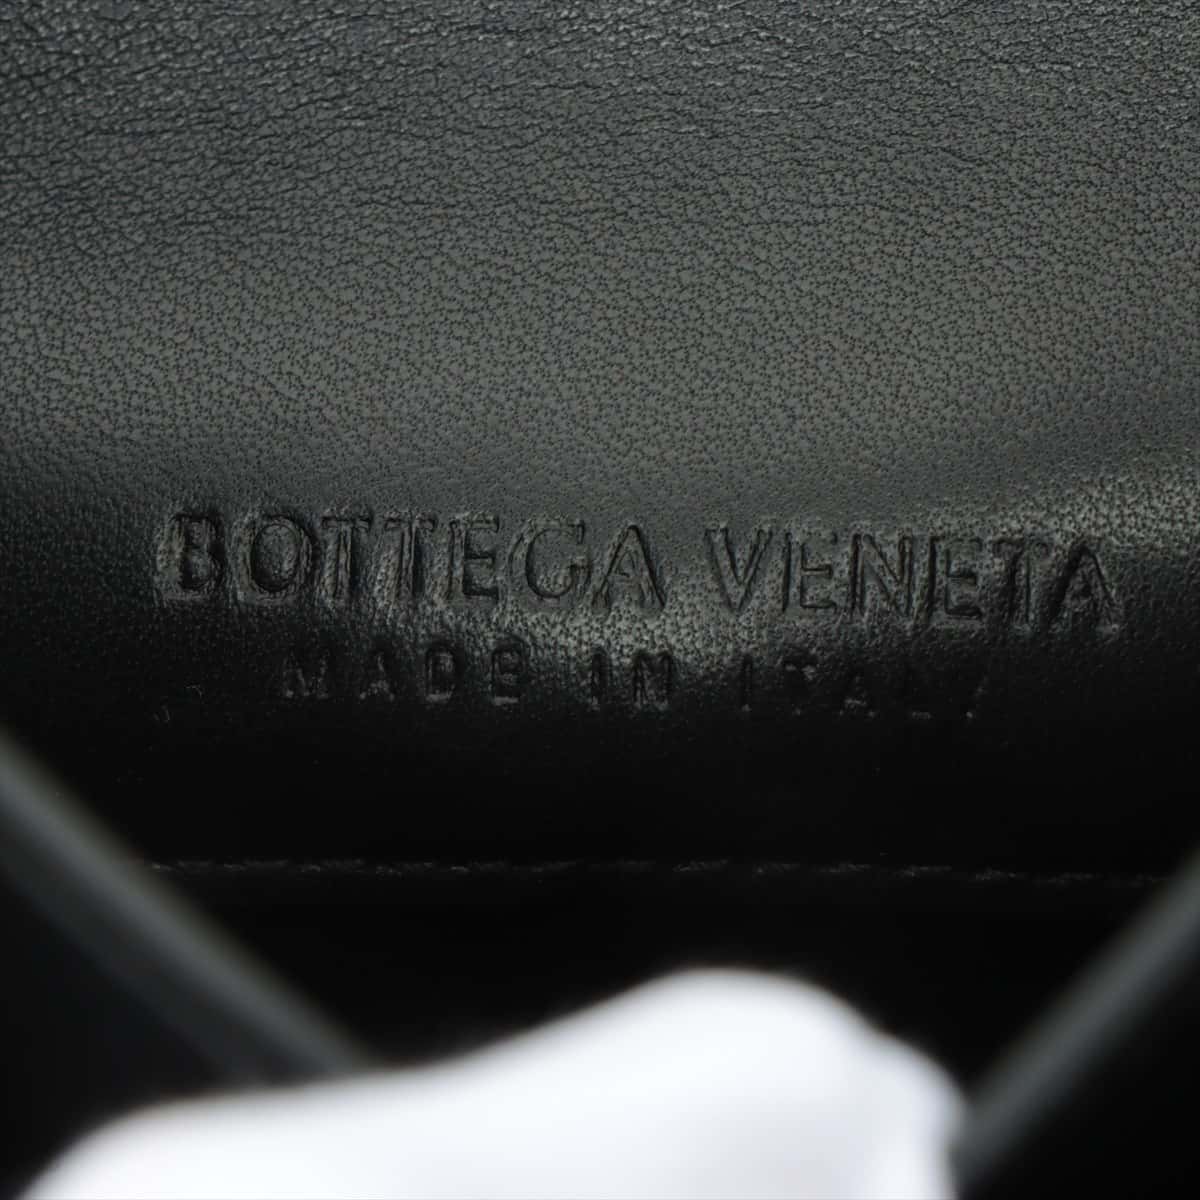 Bottega Veneta Mountain Leather Shoulder Bag Black